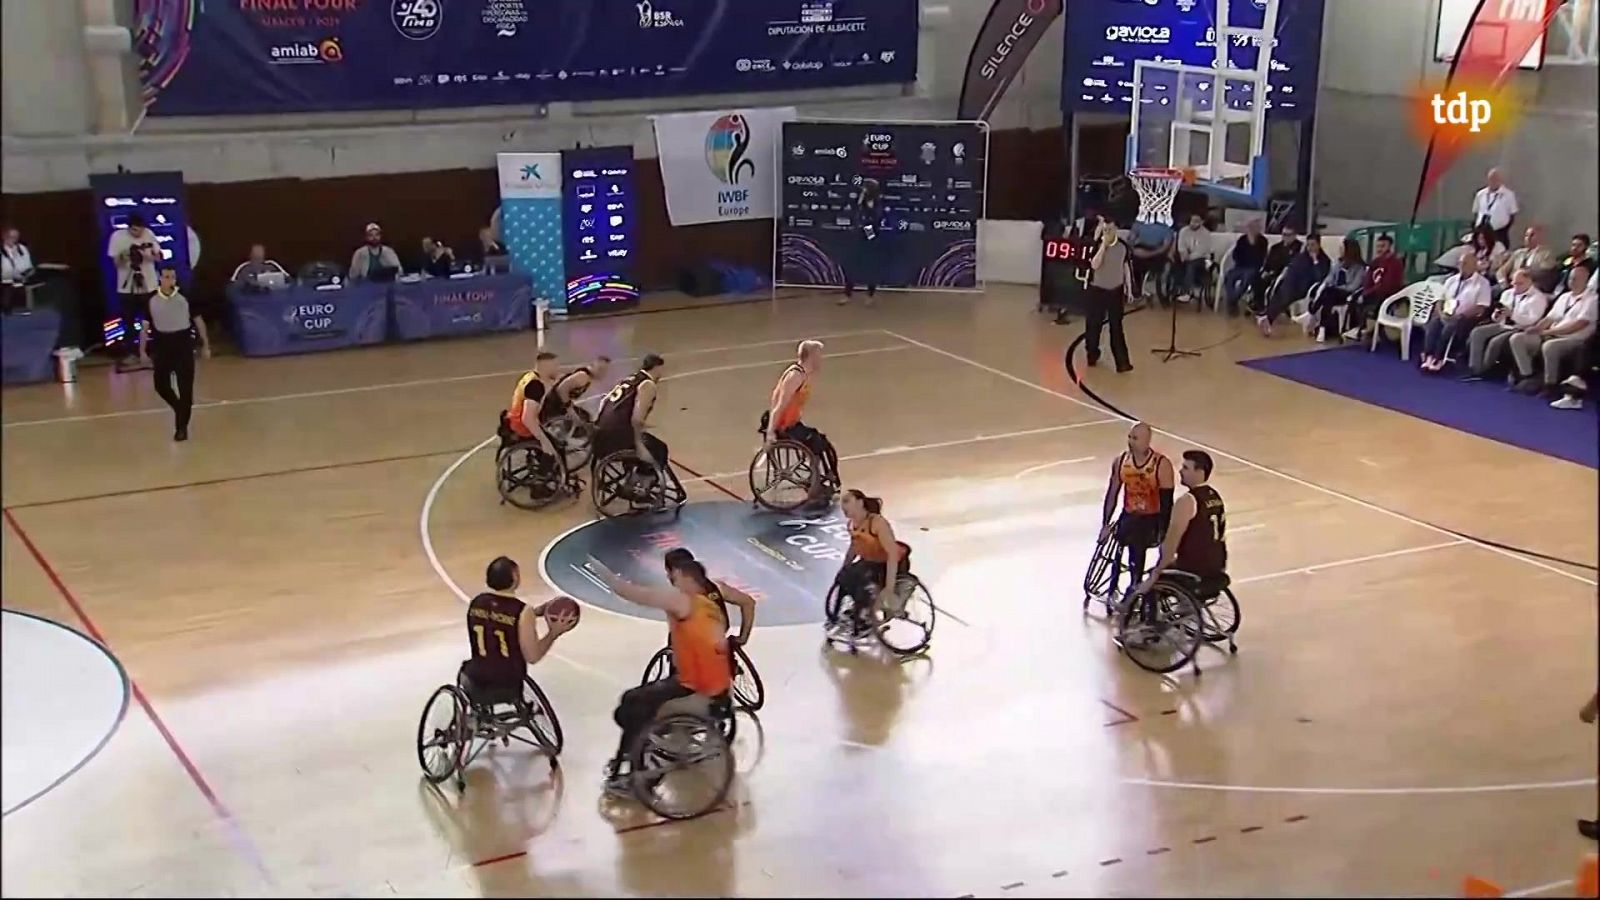 Baloncesto en silla de ruedas - Champions Cup. 2ª Semifinal: BSR Amiab Albacete - CD Ilunion